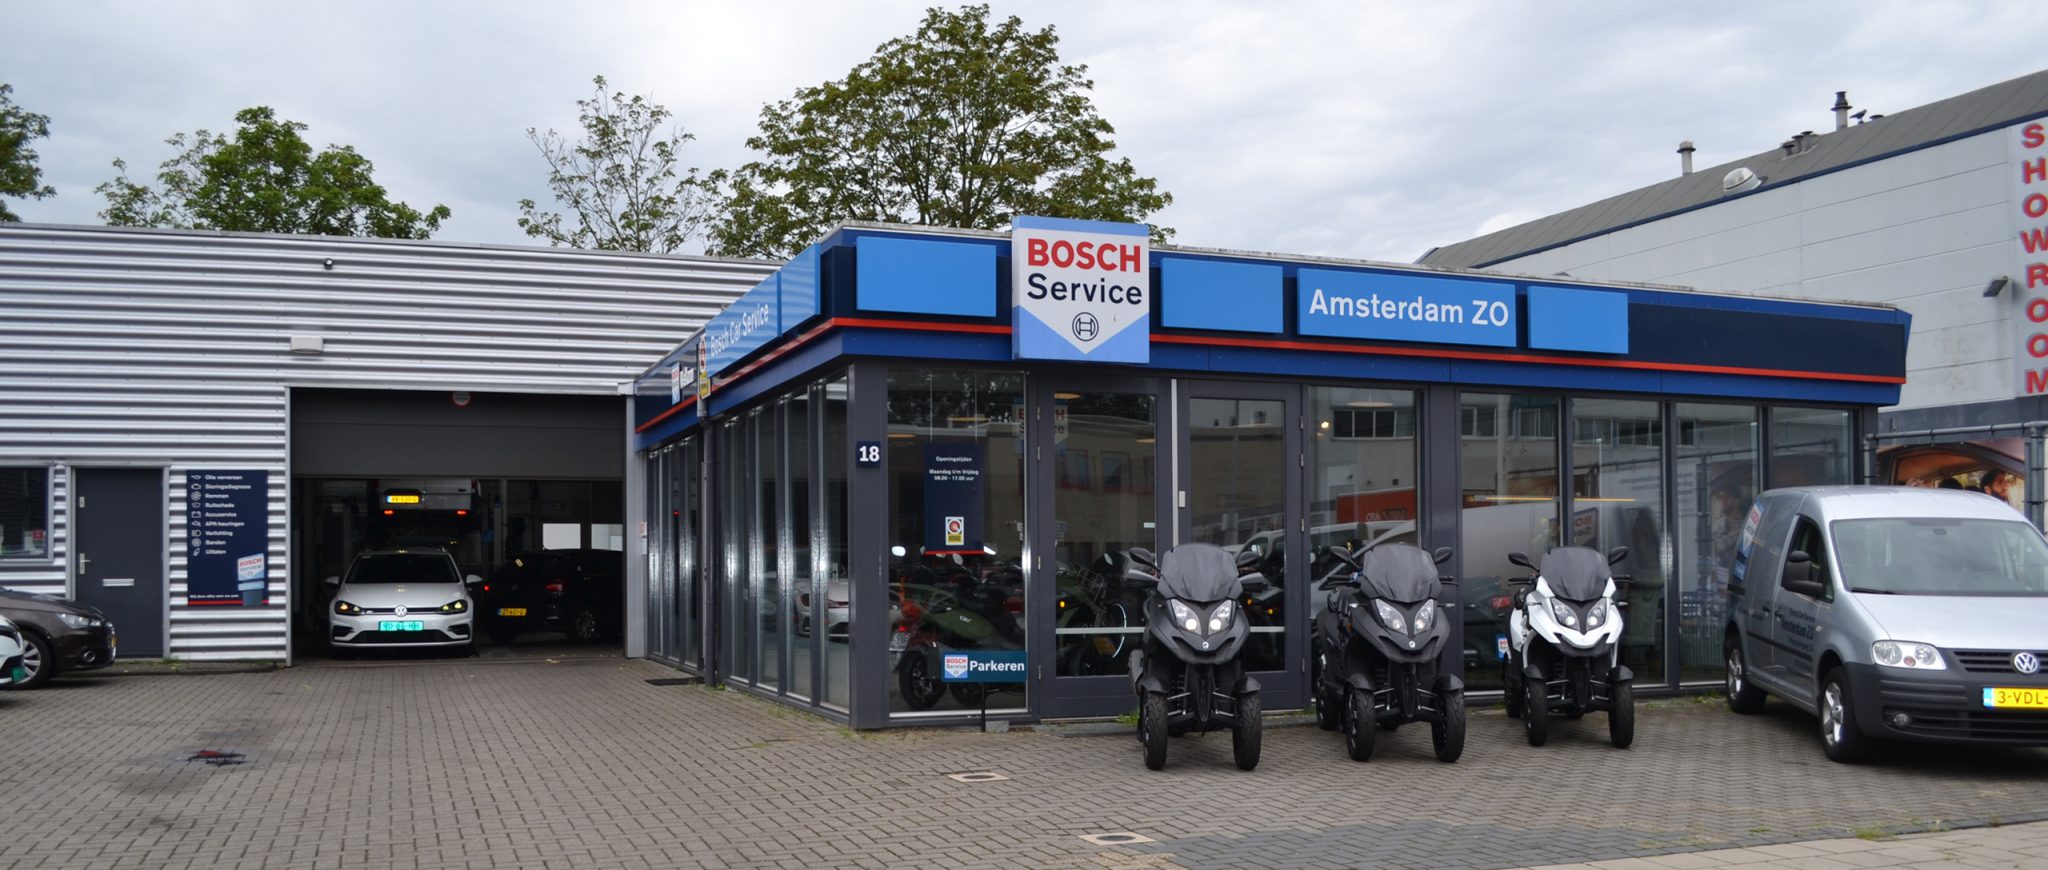 Bosch Car Service Amsterdam Zuid Oost